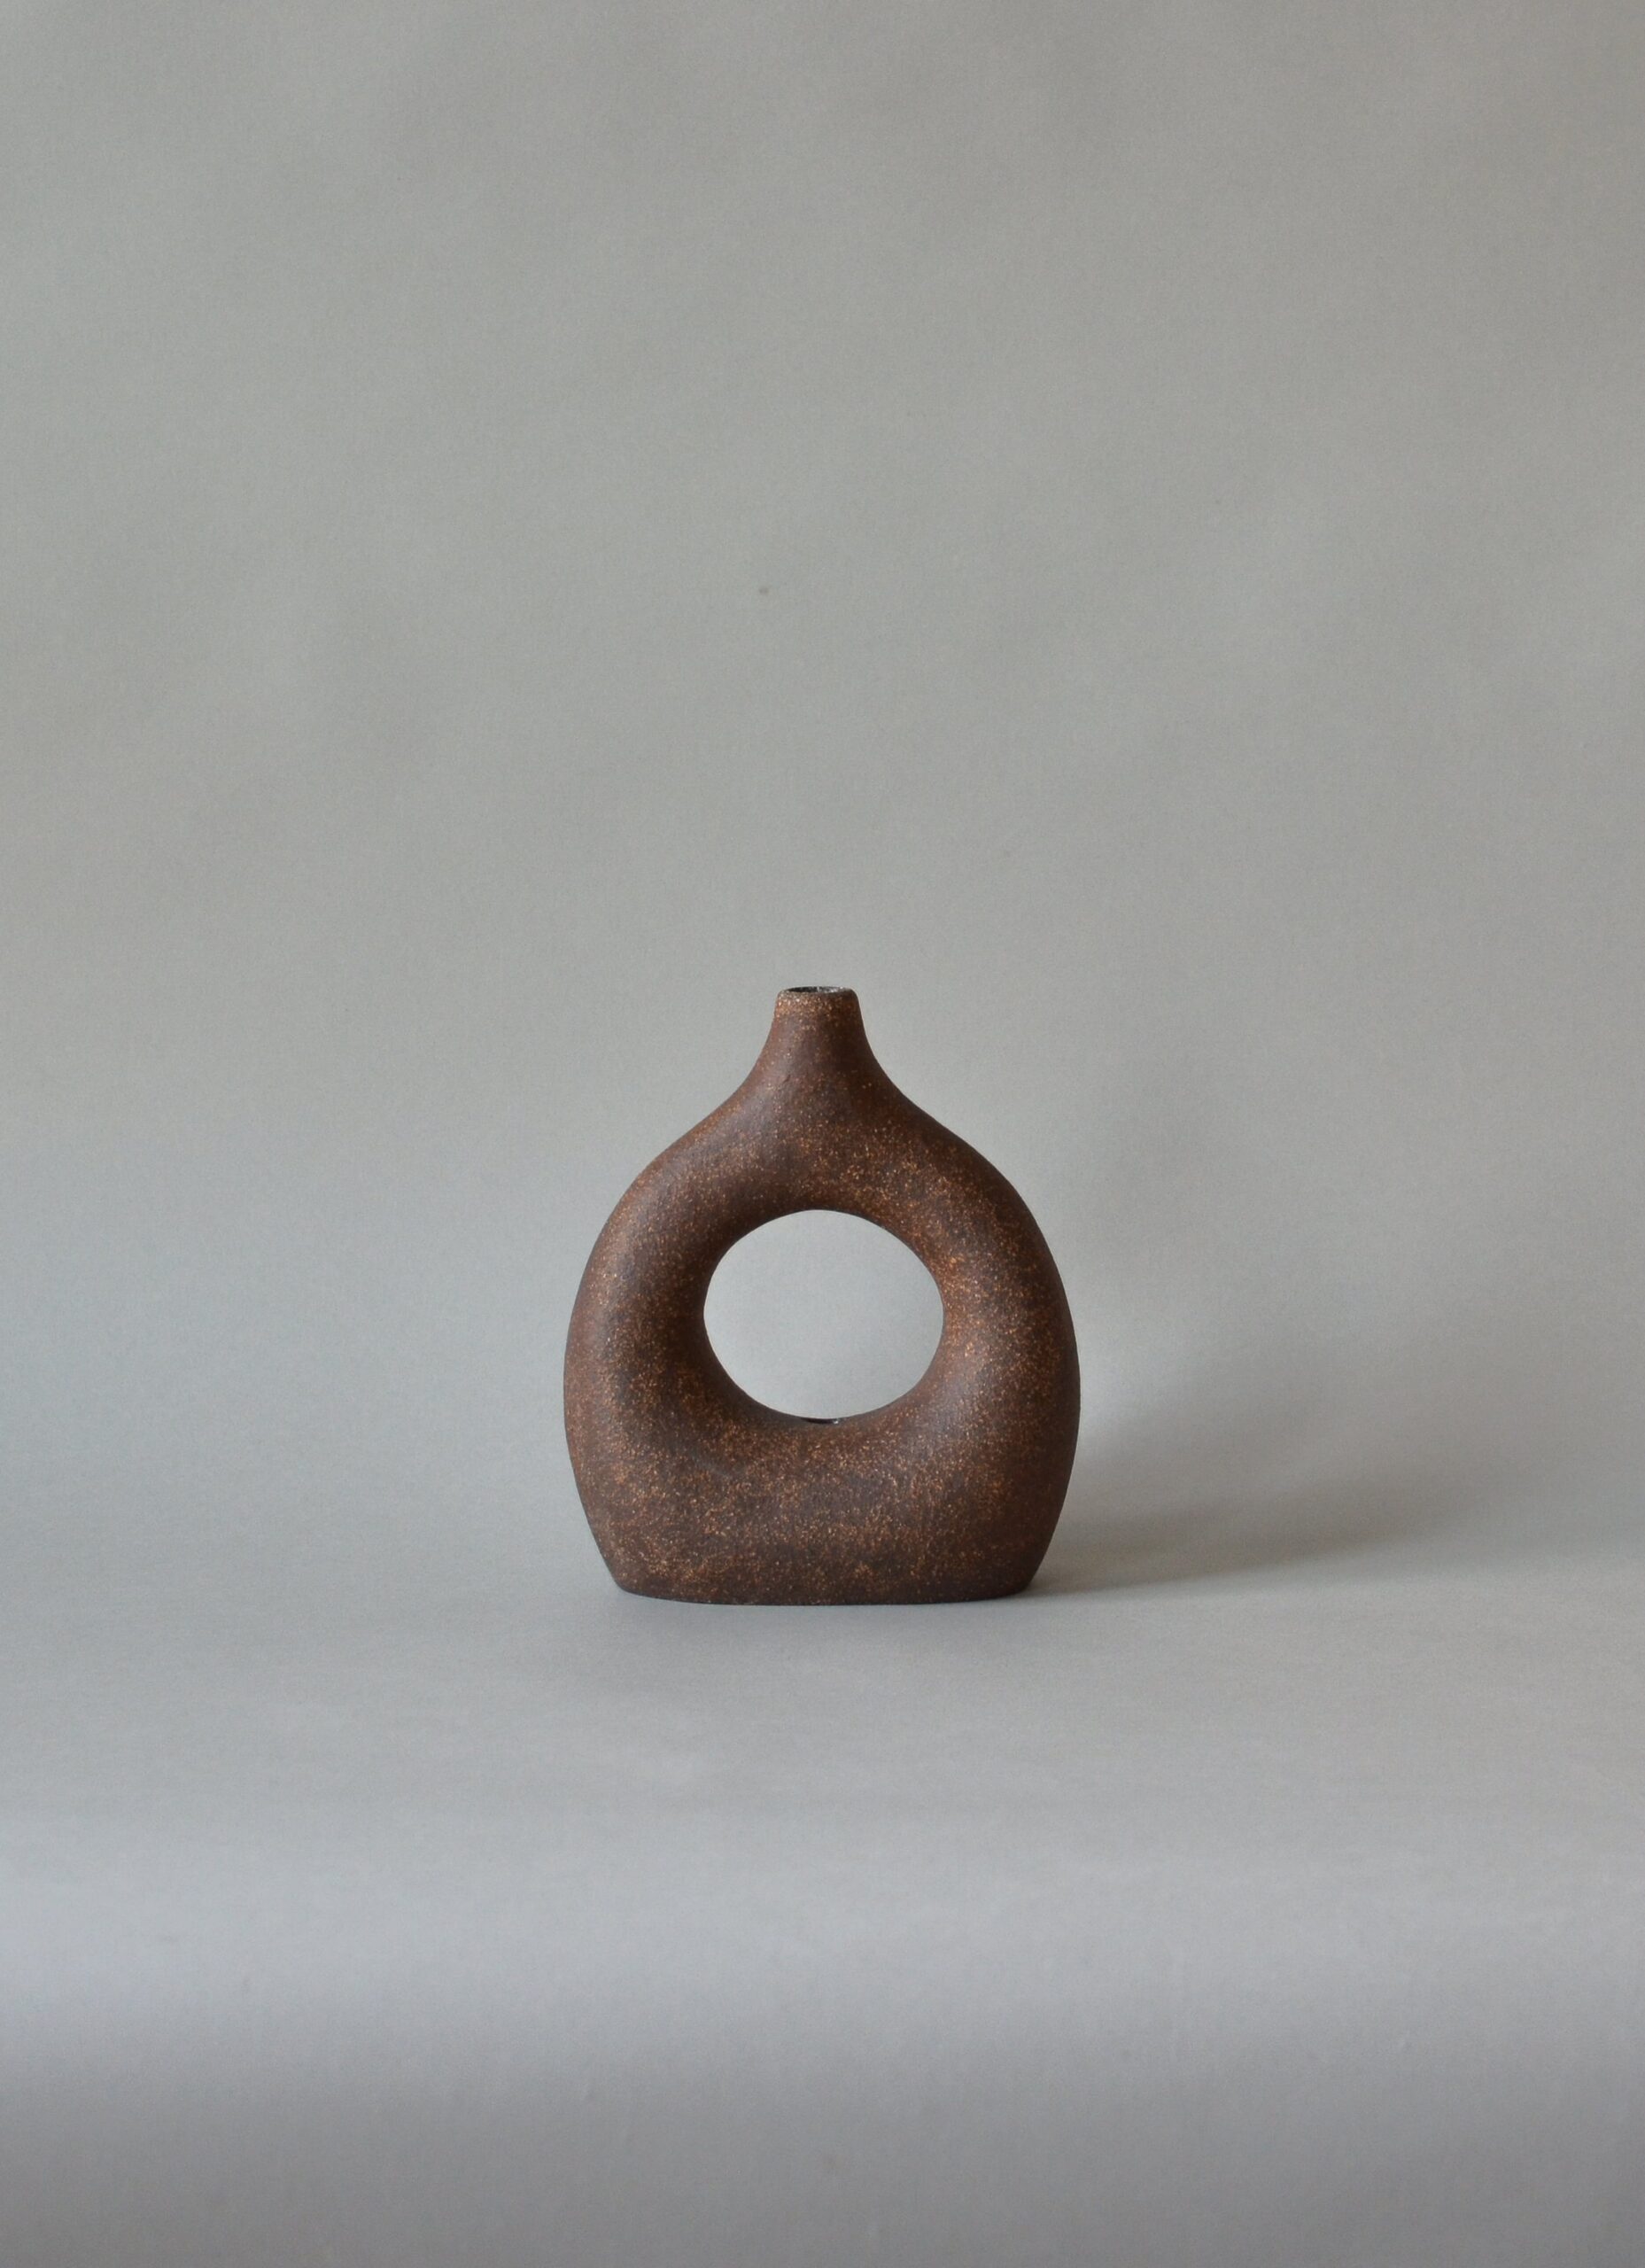 Viv Lee - Handmade stoneware single loop vessel - Limited Edition Holo 1 - Reduction fired - dark brown